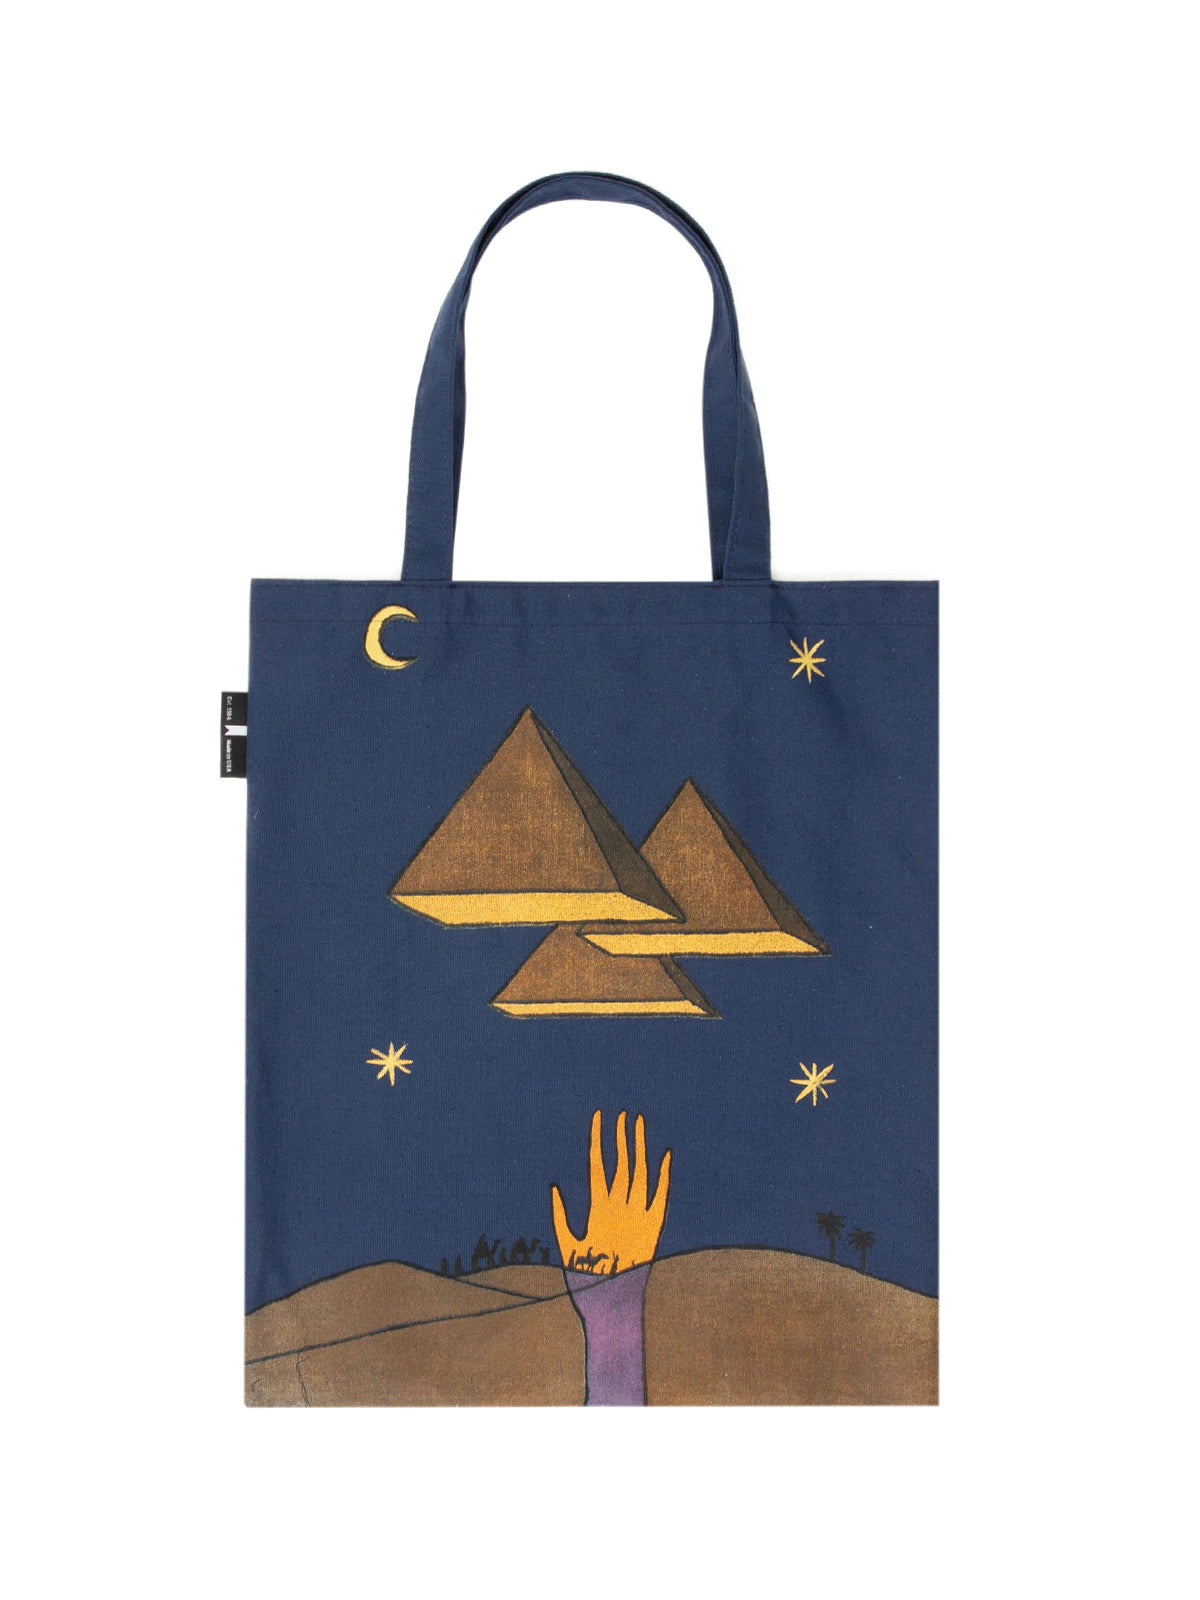 The Alchemist Tote Bag